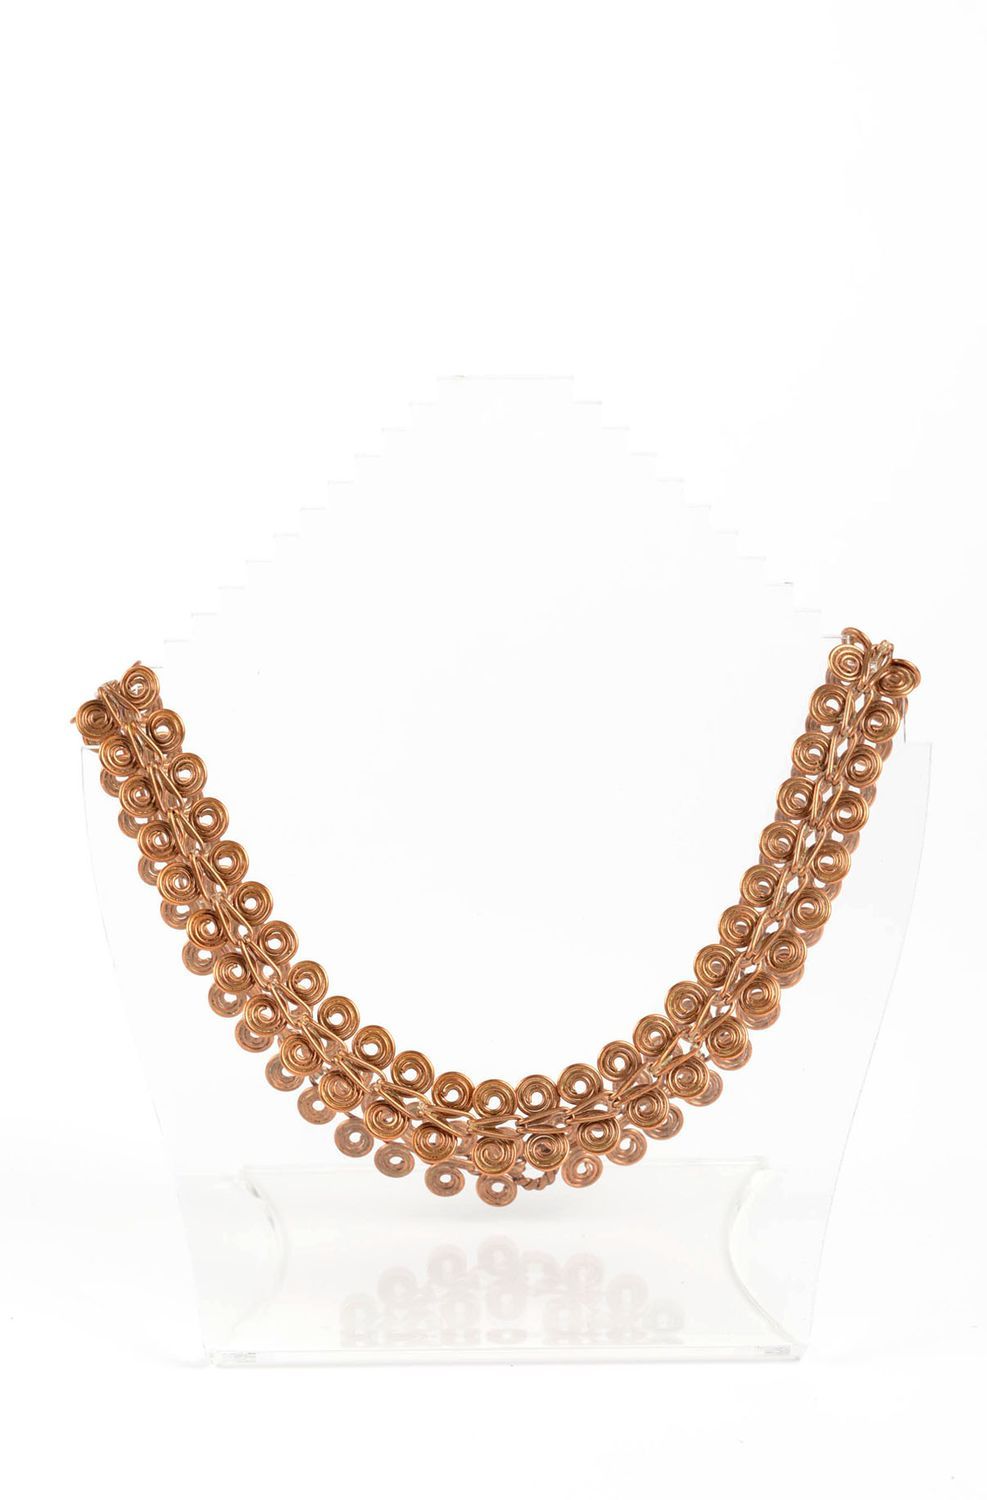 Handmade necklace unusual necklace designer accessory gift ideas copper jewelry photo 1